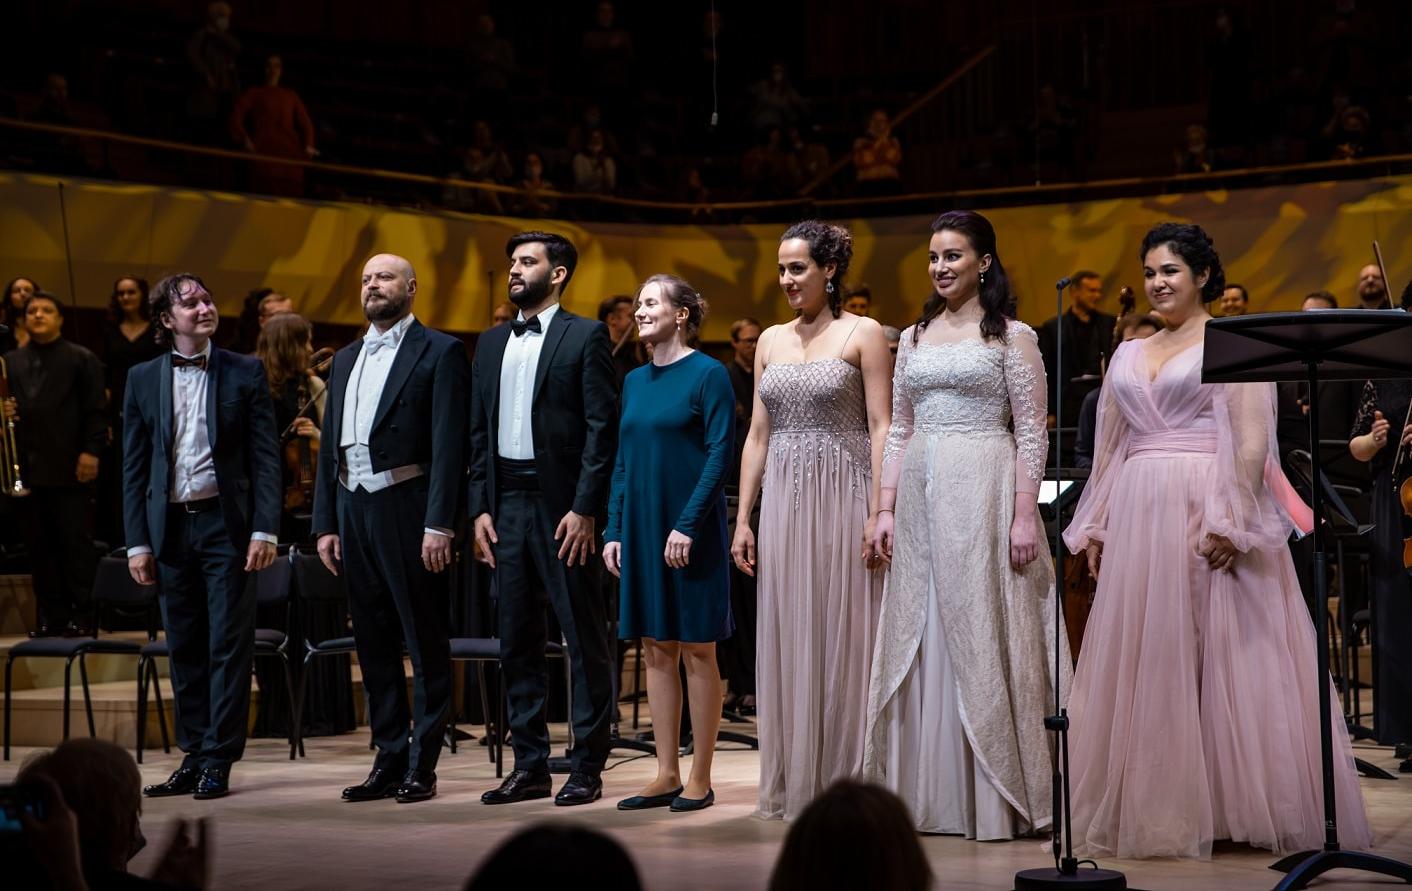 Mendelssohn, rare “Elijah” oratorio was performed at Zaryadye Hall